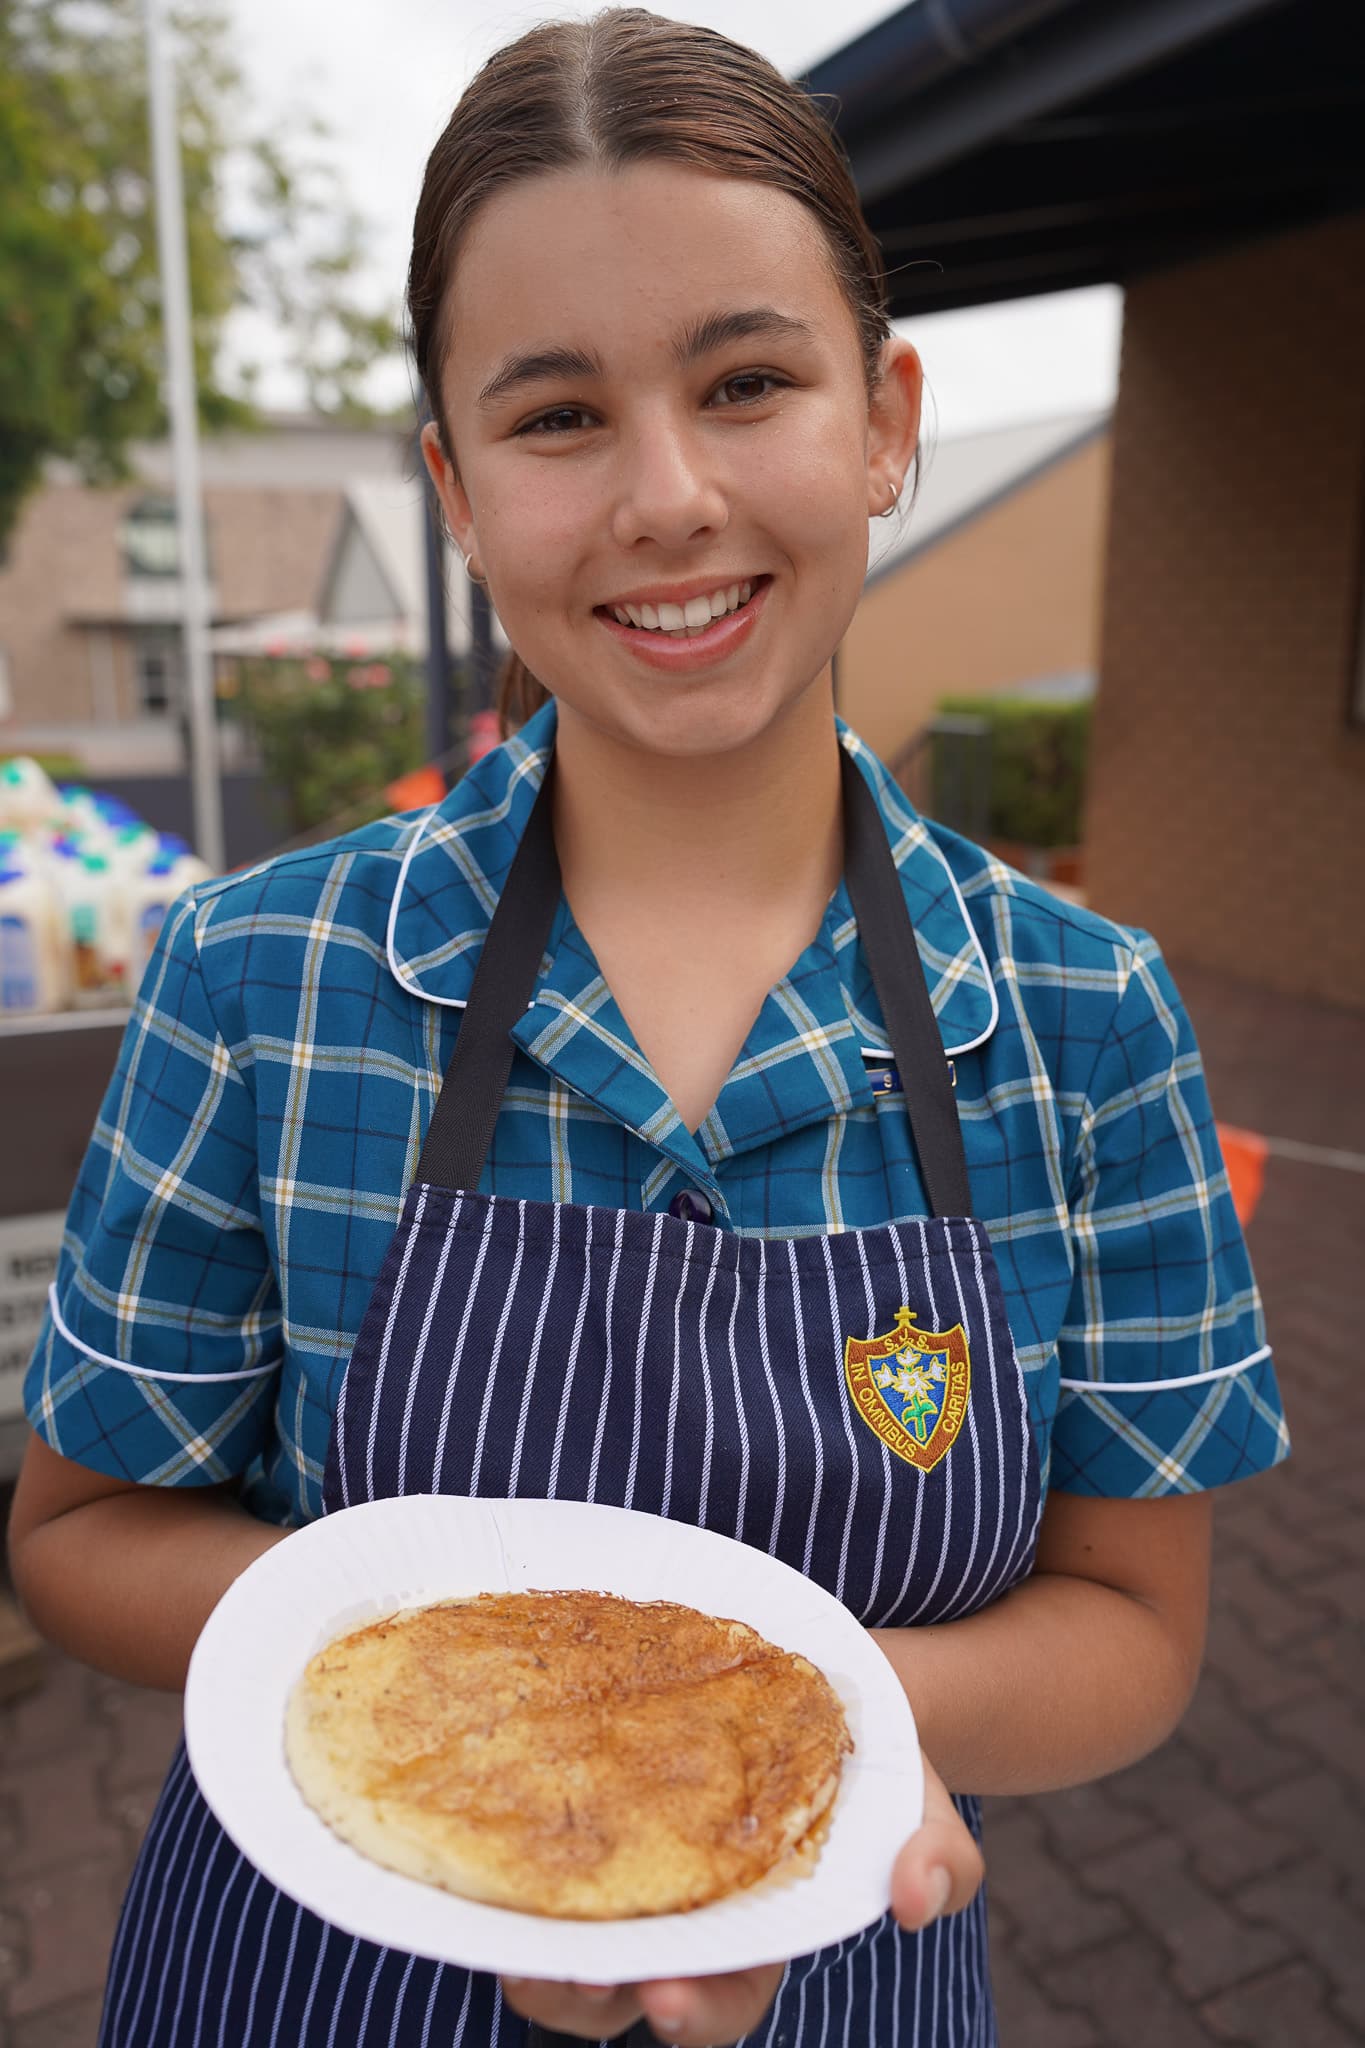 Student representative council - student serving pancake on Shrove Tuesday